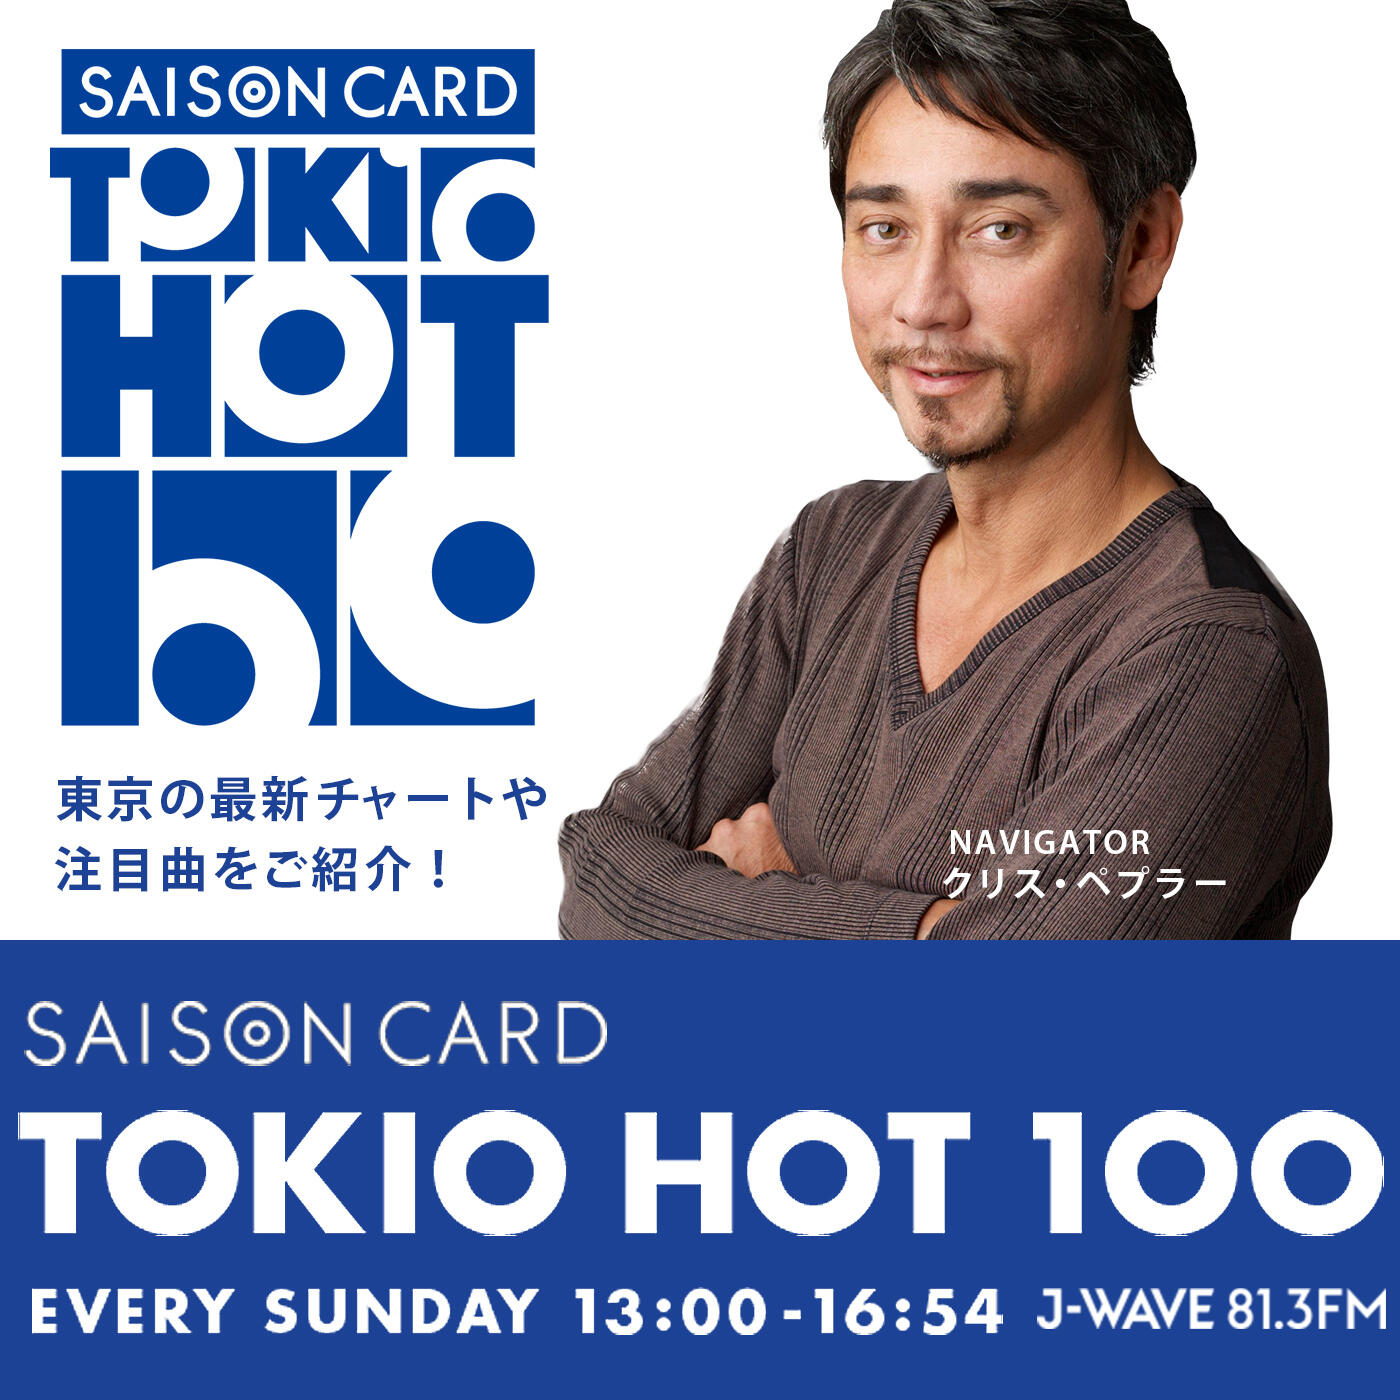 Check The Tokio Hot 100 Iheartradio